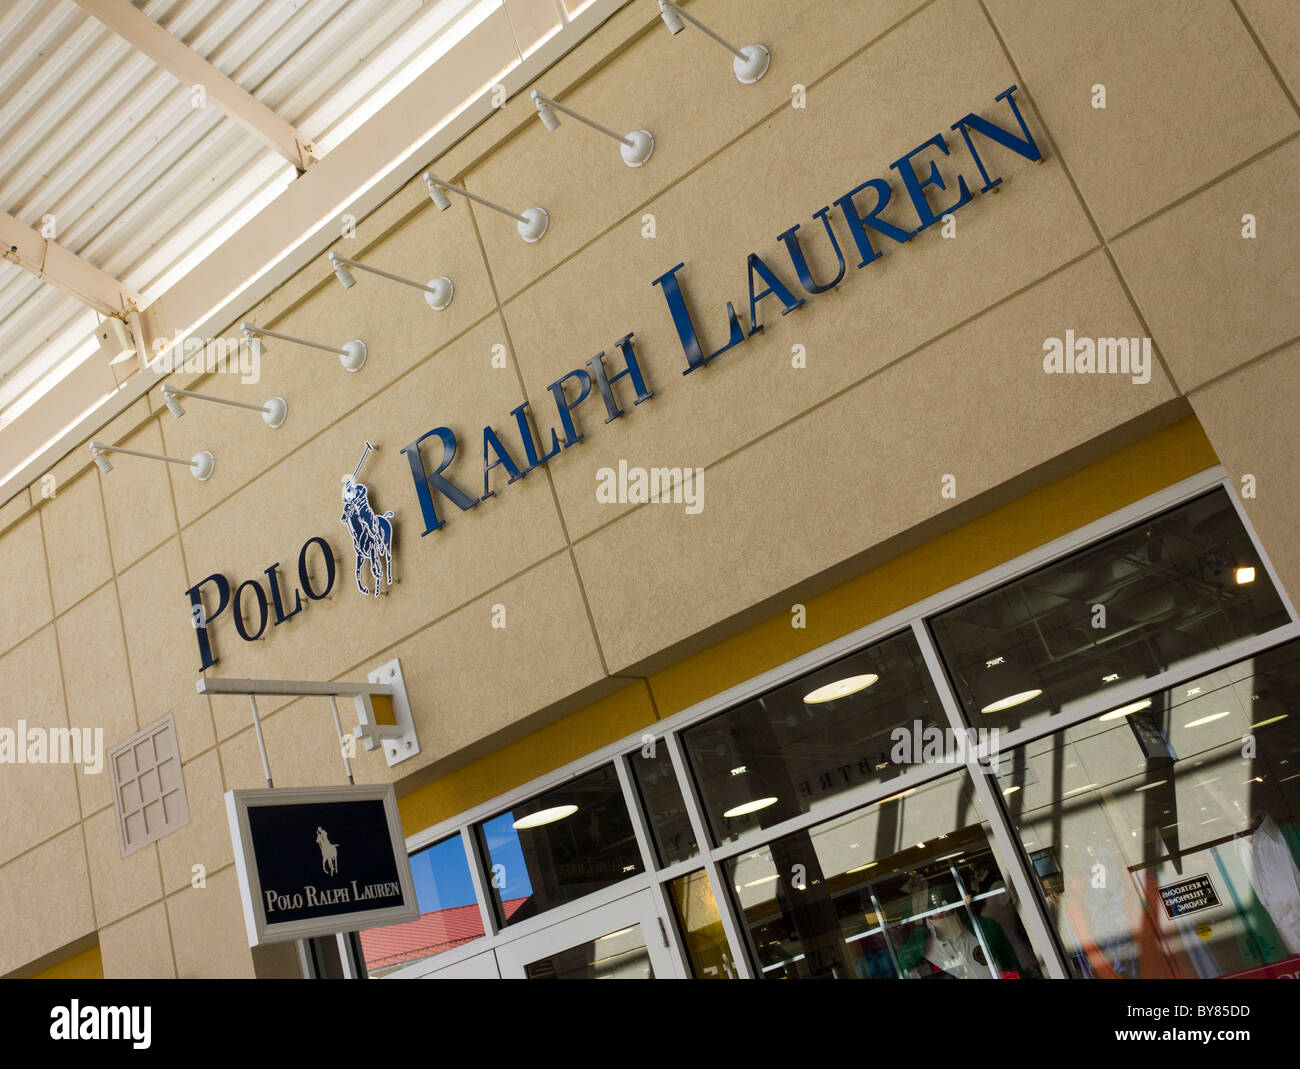 Polo Ralph Lauren store, Chicago 